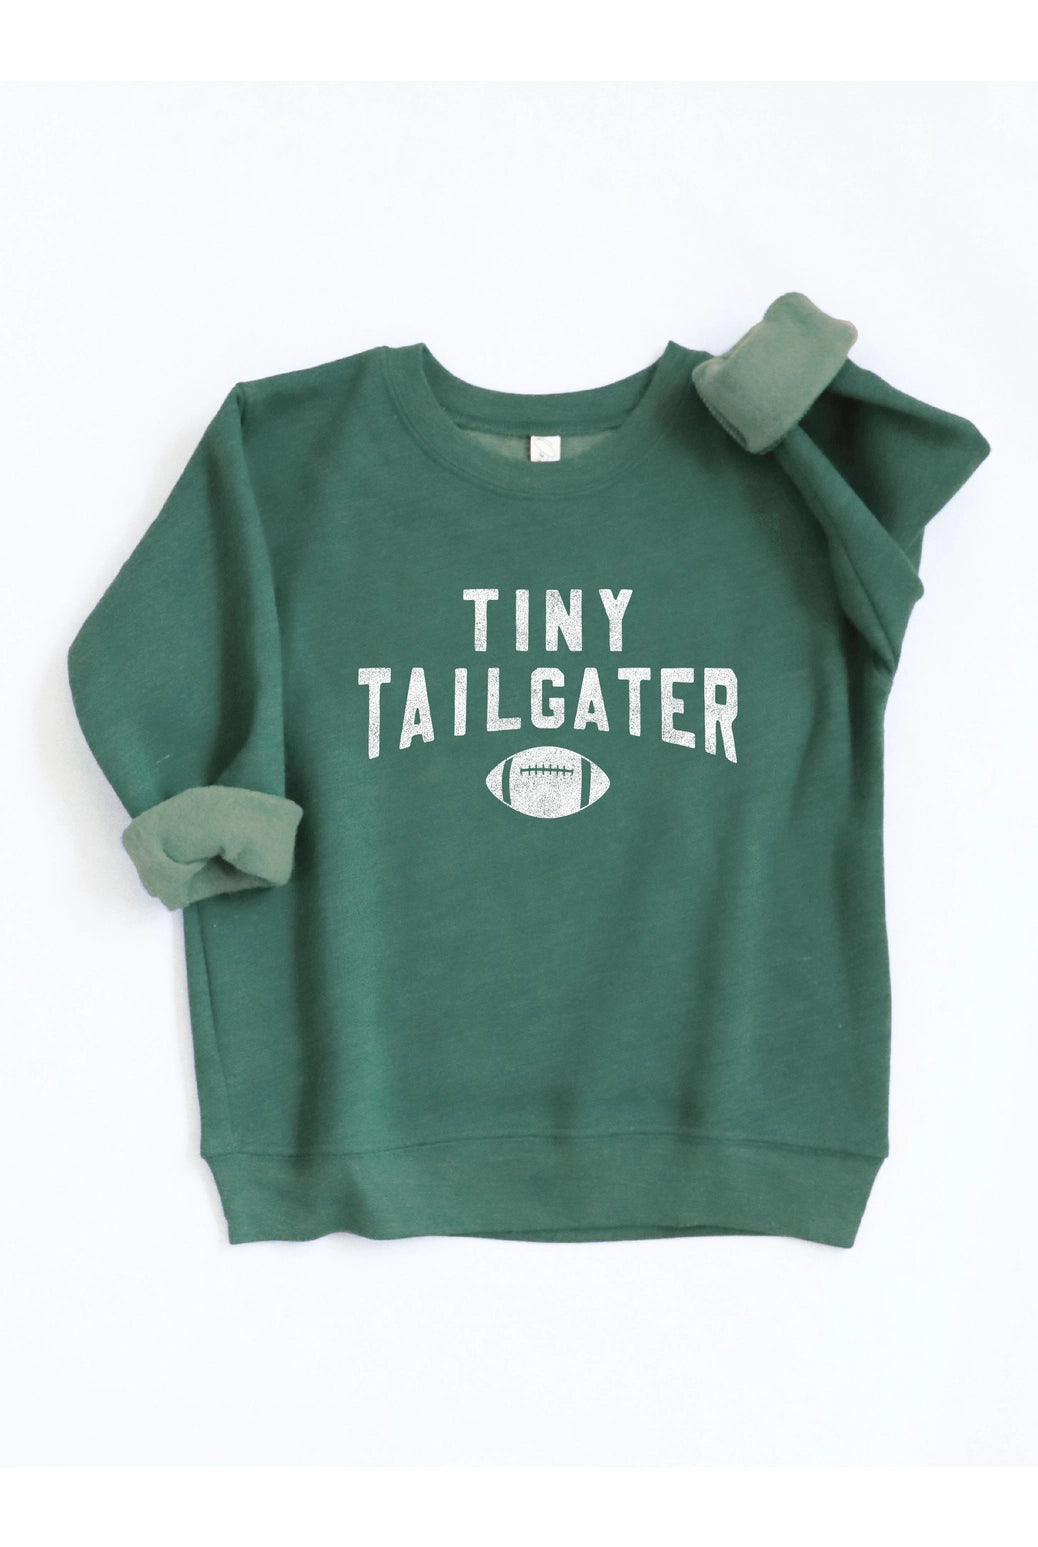 Tiny Tailgater Sweatshirt